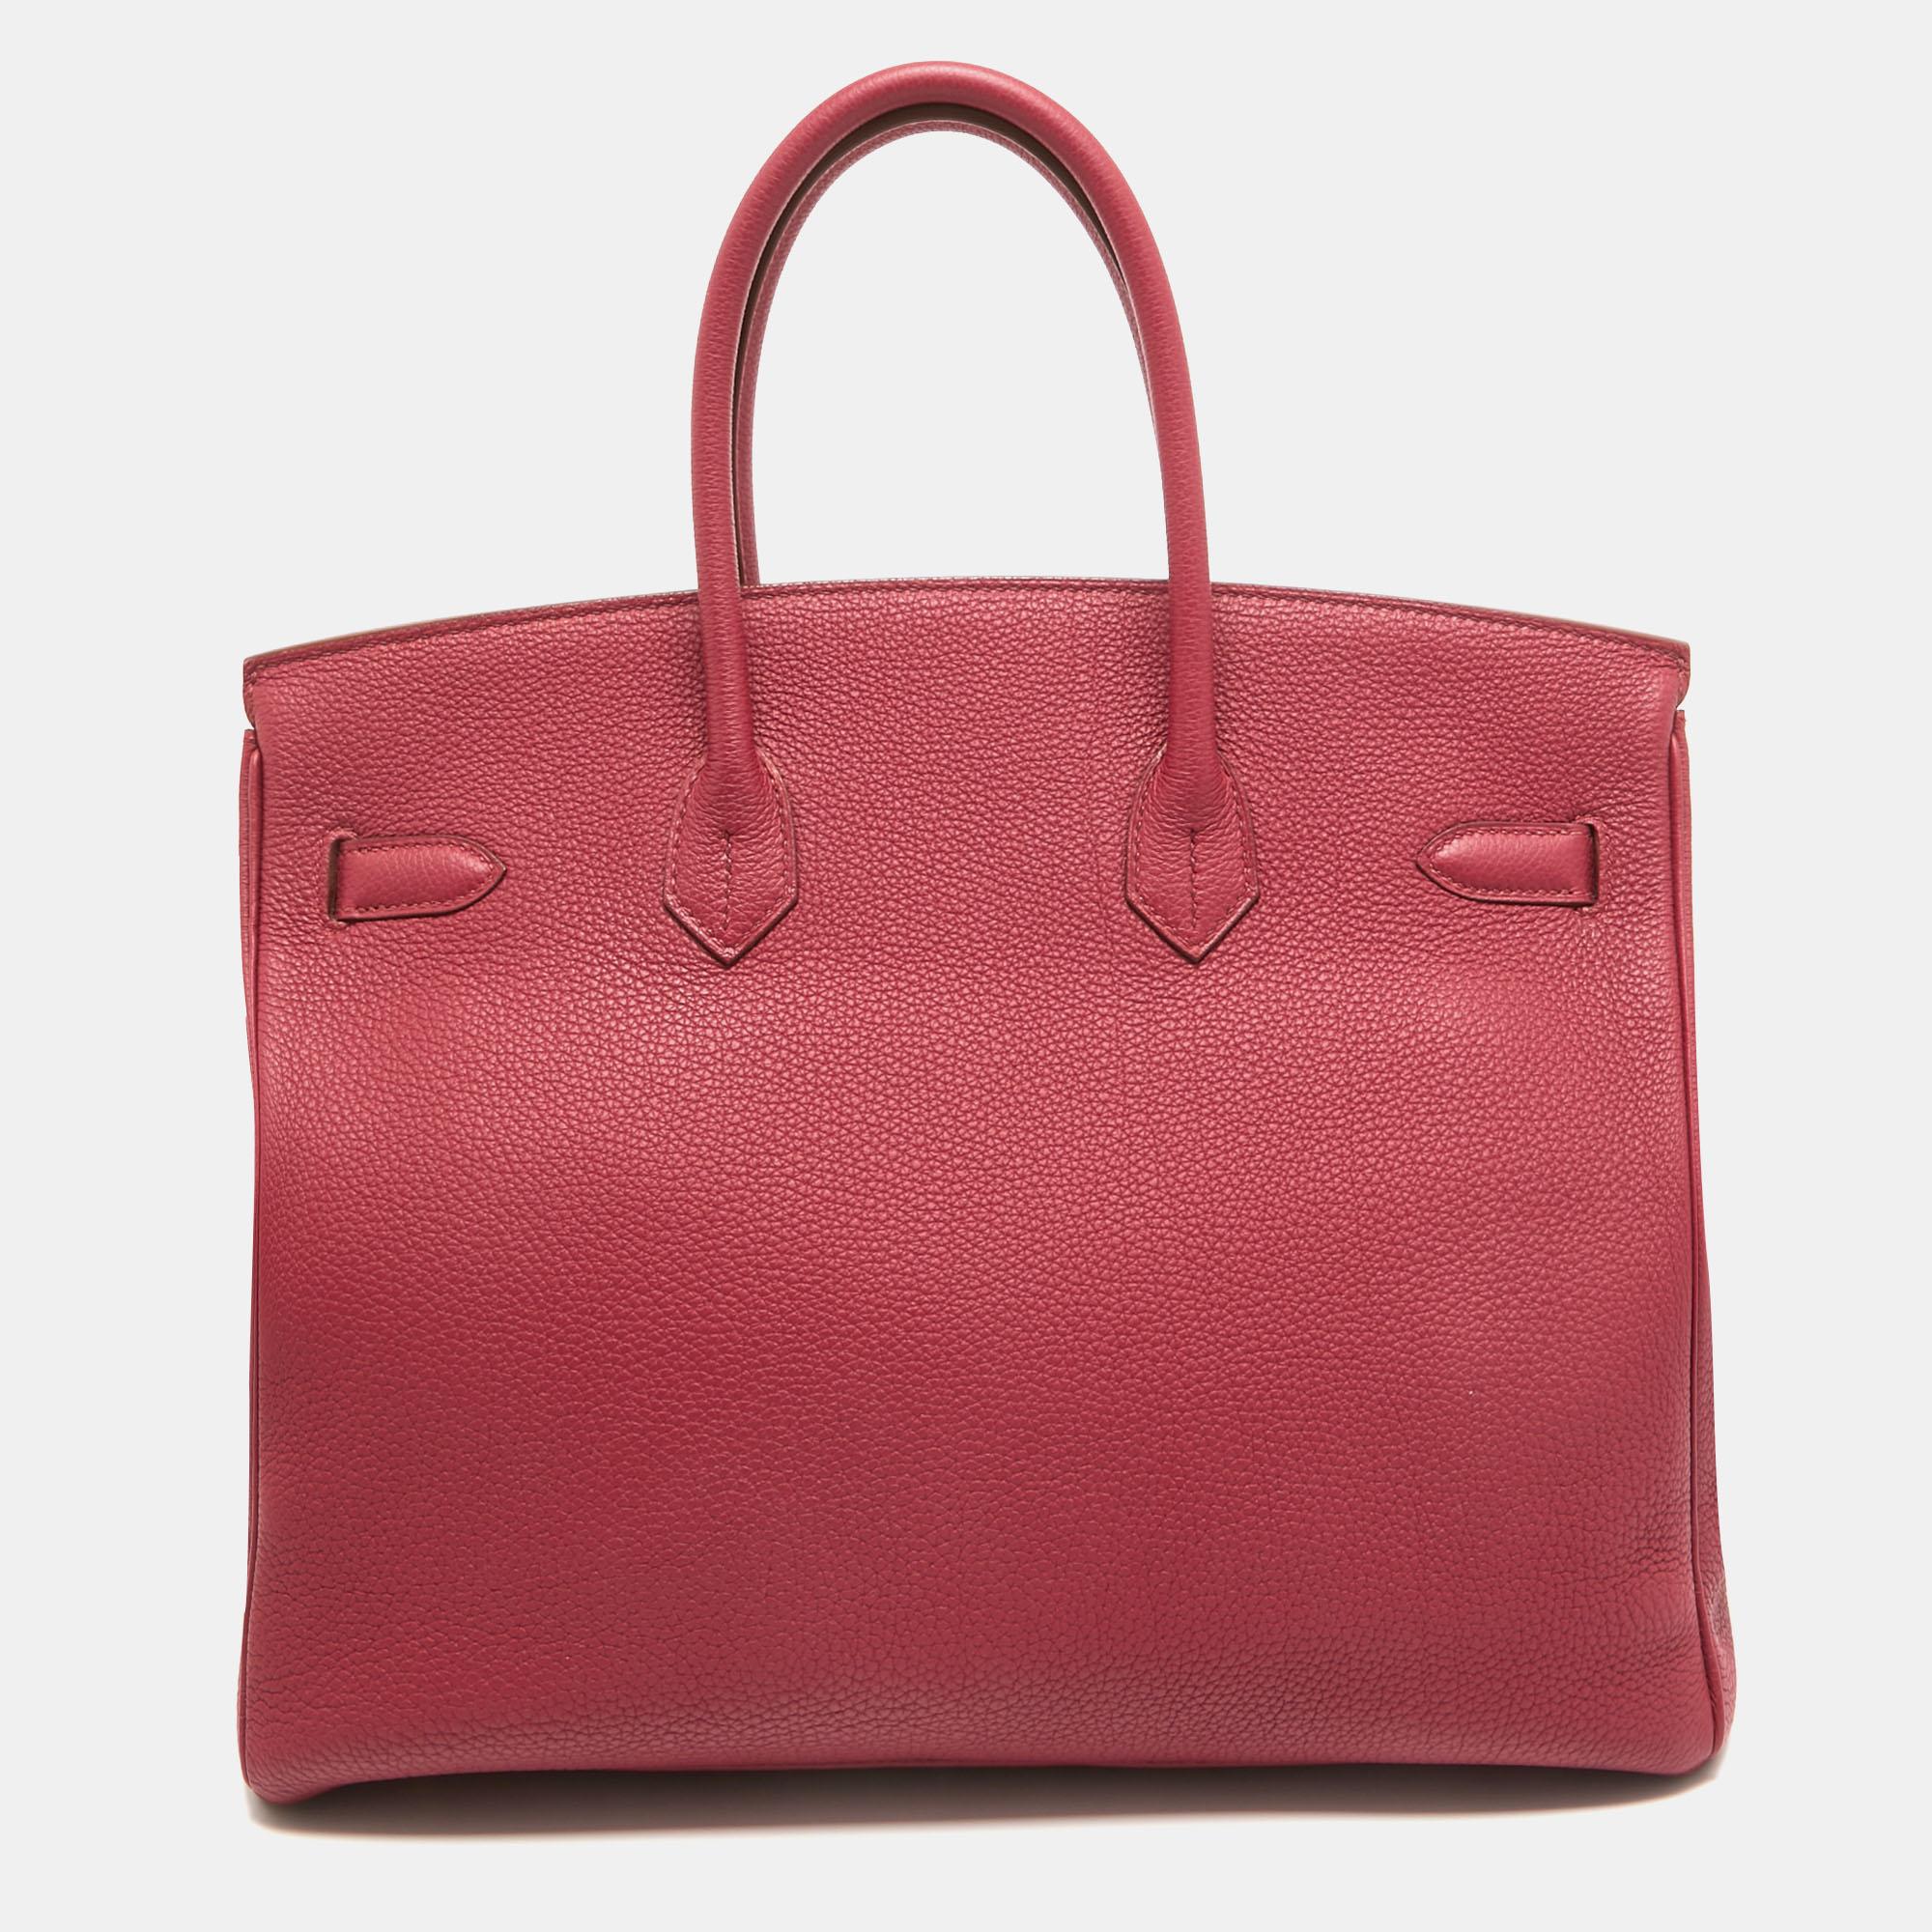 Hermes Ruby Togo Leather Gold Finish Birkin 35 Bag In Good Condition For Sale In Dubai, Al Qouz 2